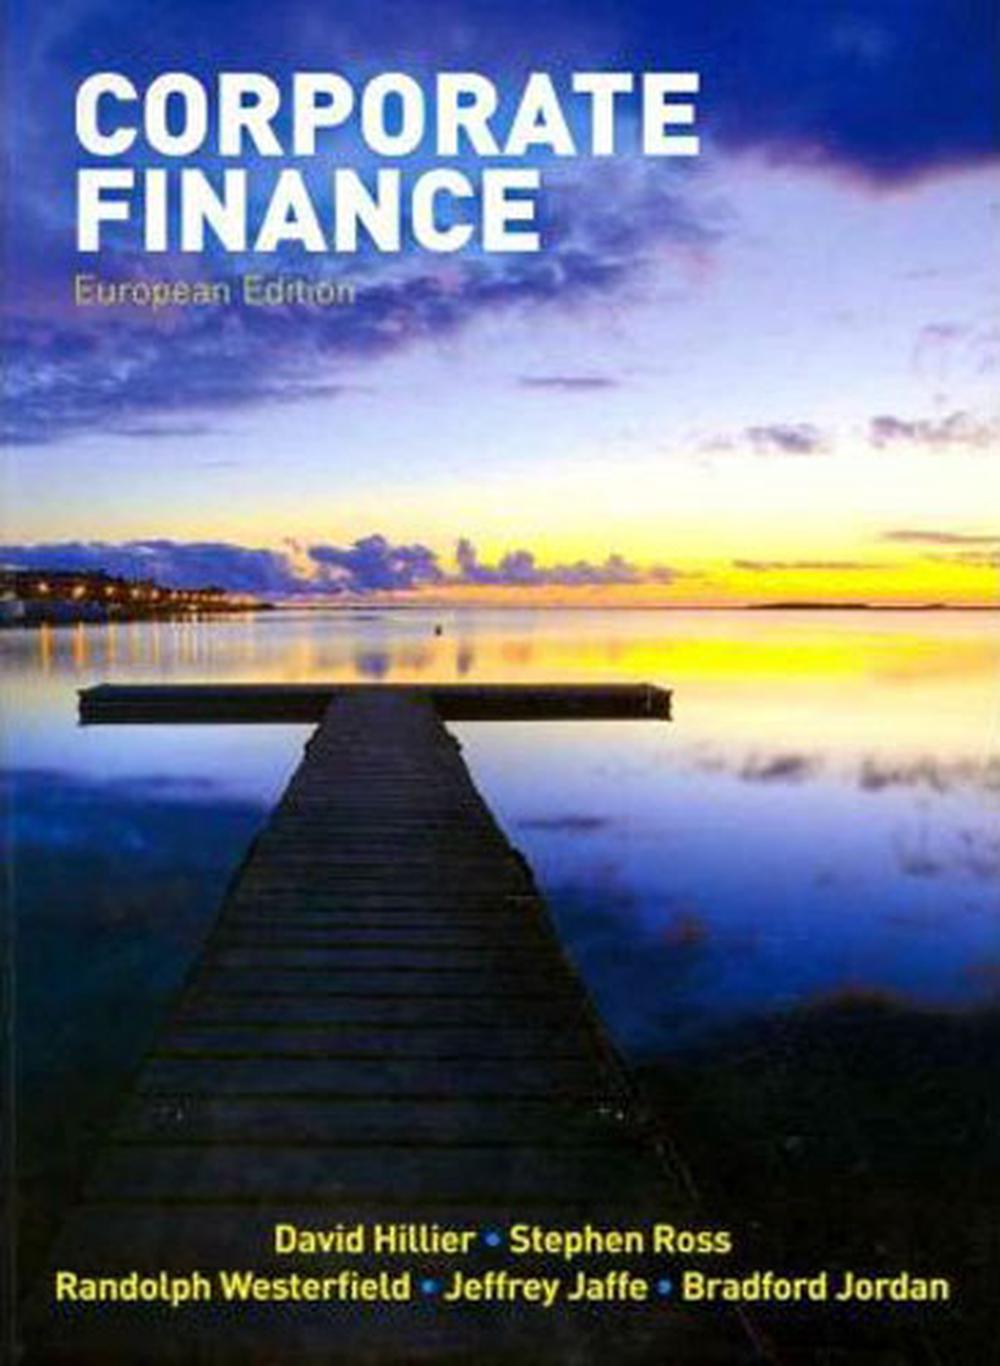 Small Business Finance Blog